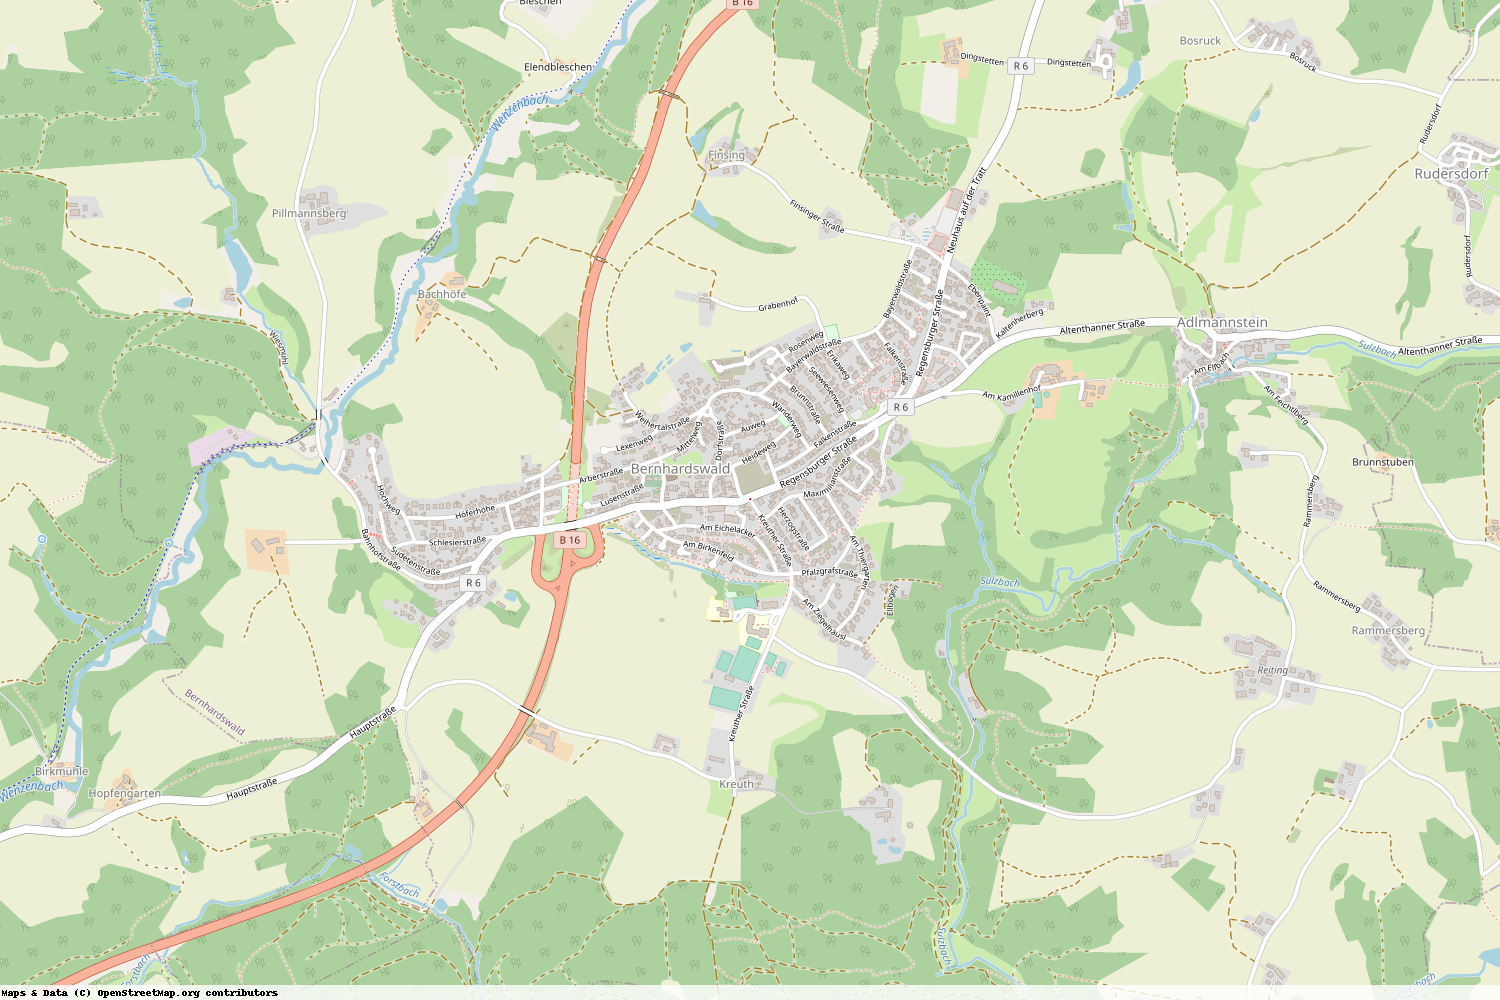 Ist gerade Stromausfall in Bayern - Regensburg - Bernhardswald?